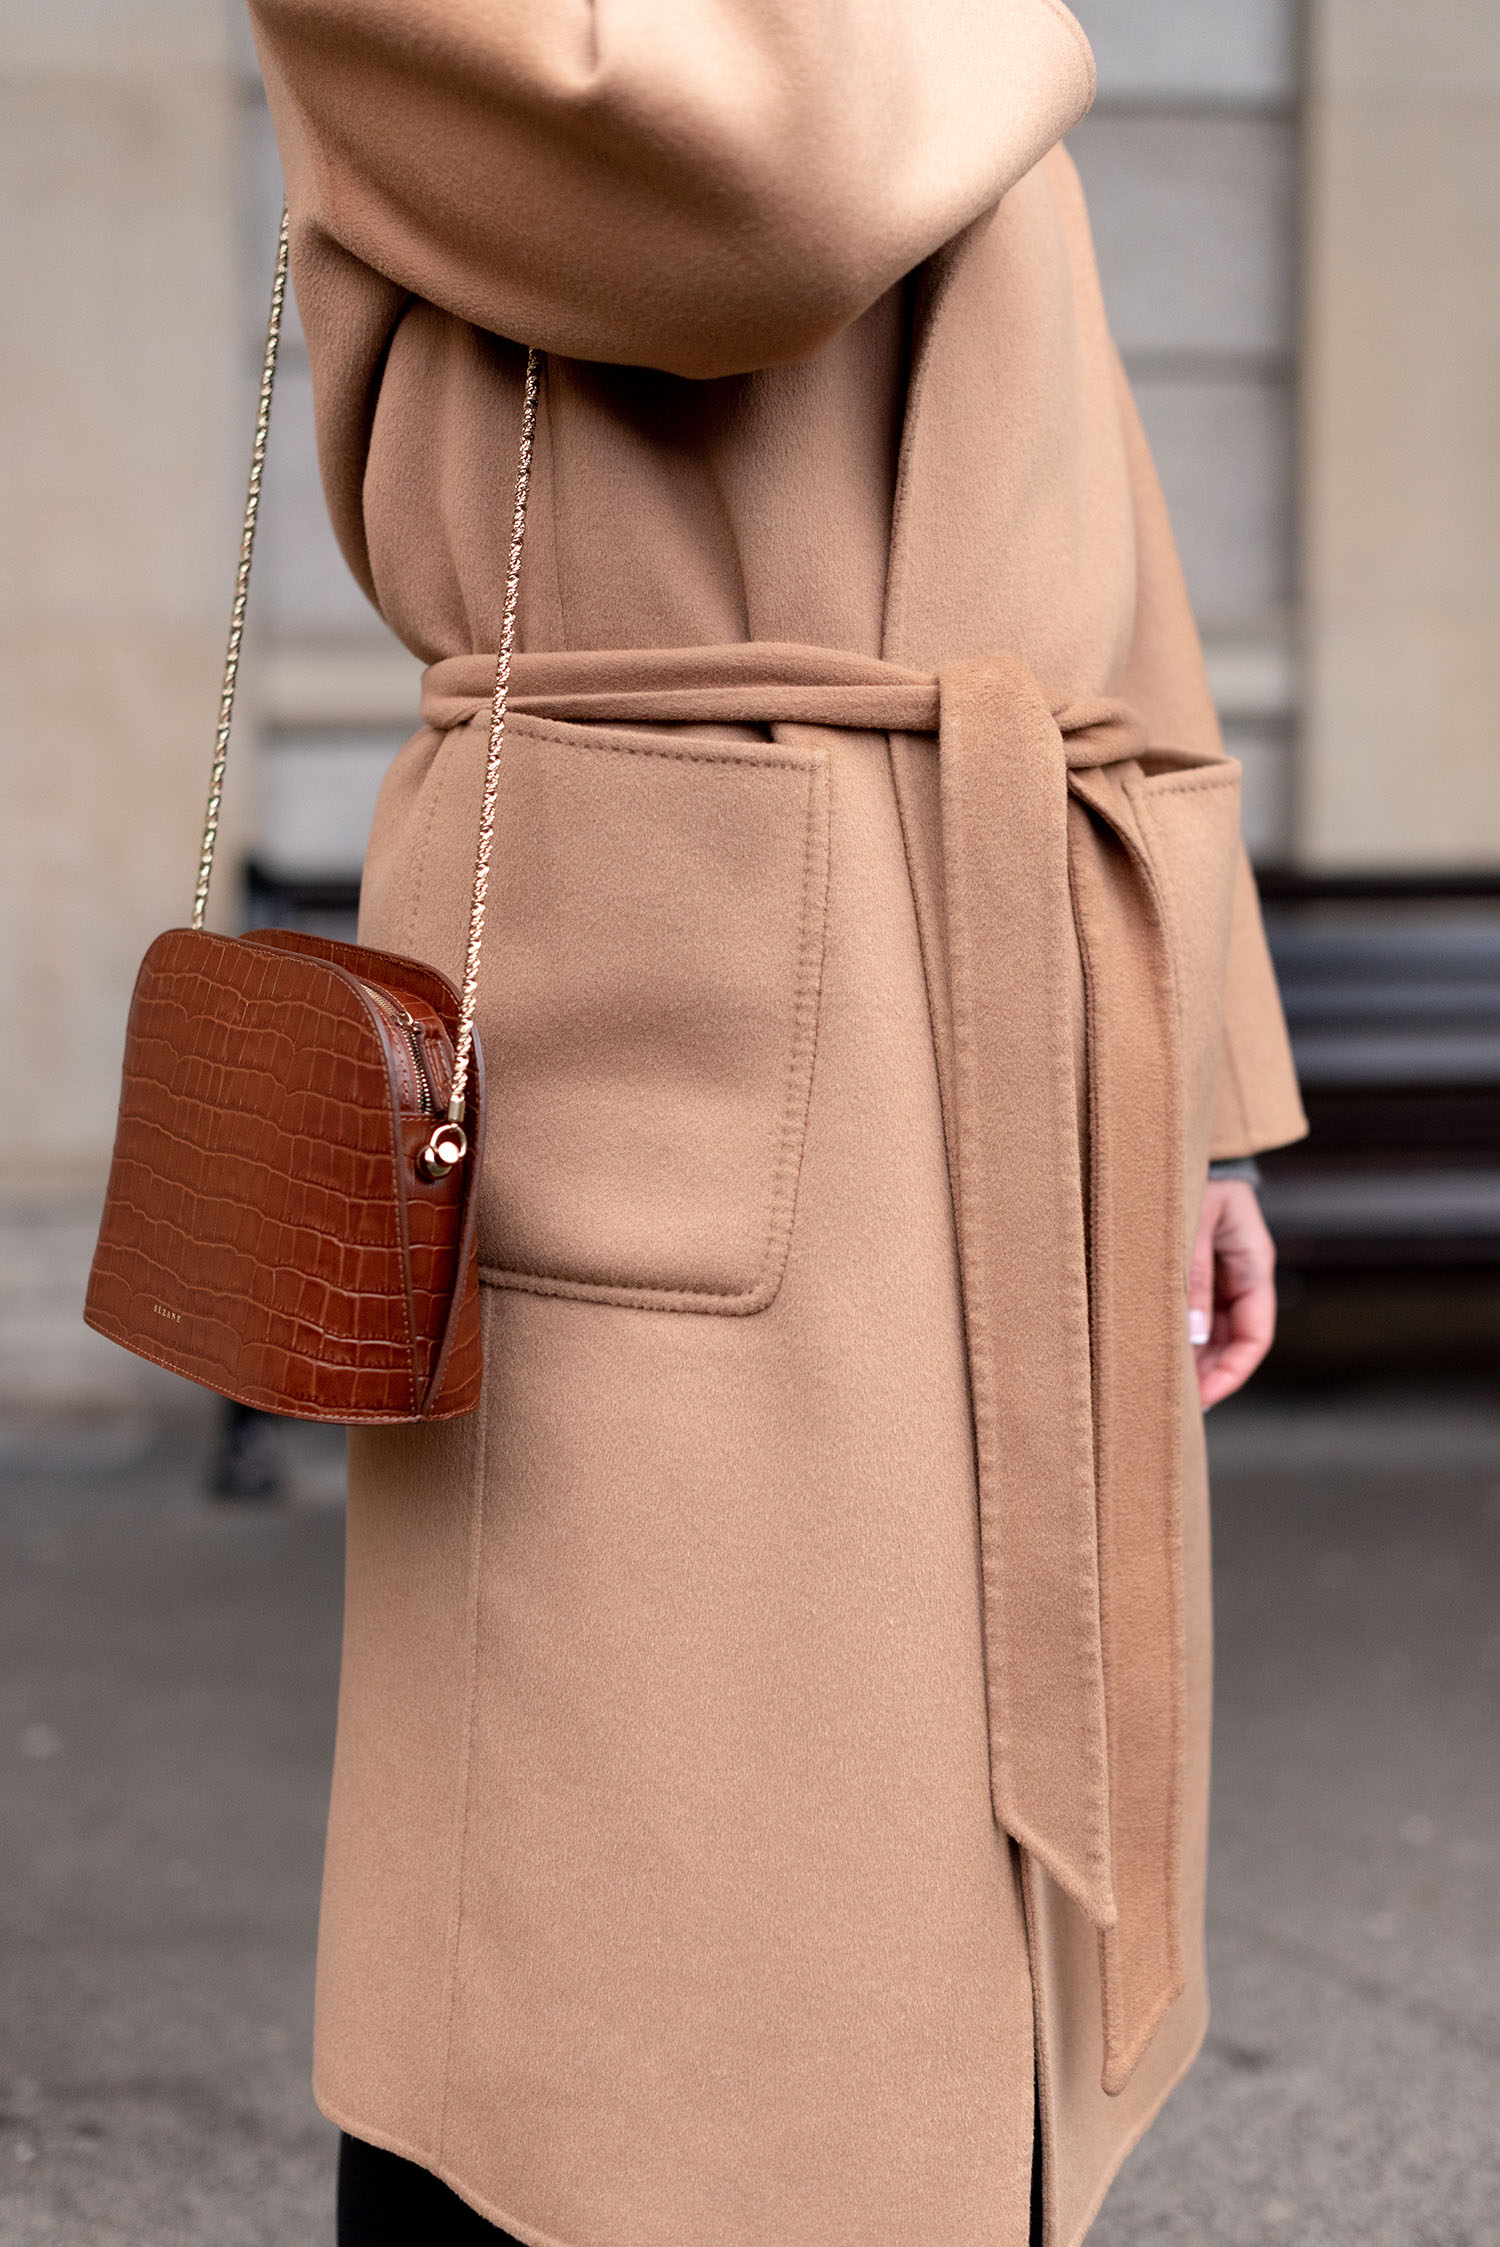 Coco & Vera - Sezane Victor handbag, The Curated camel coat